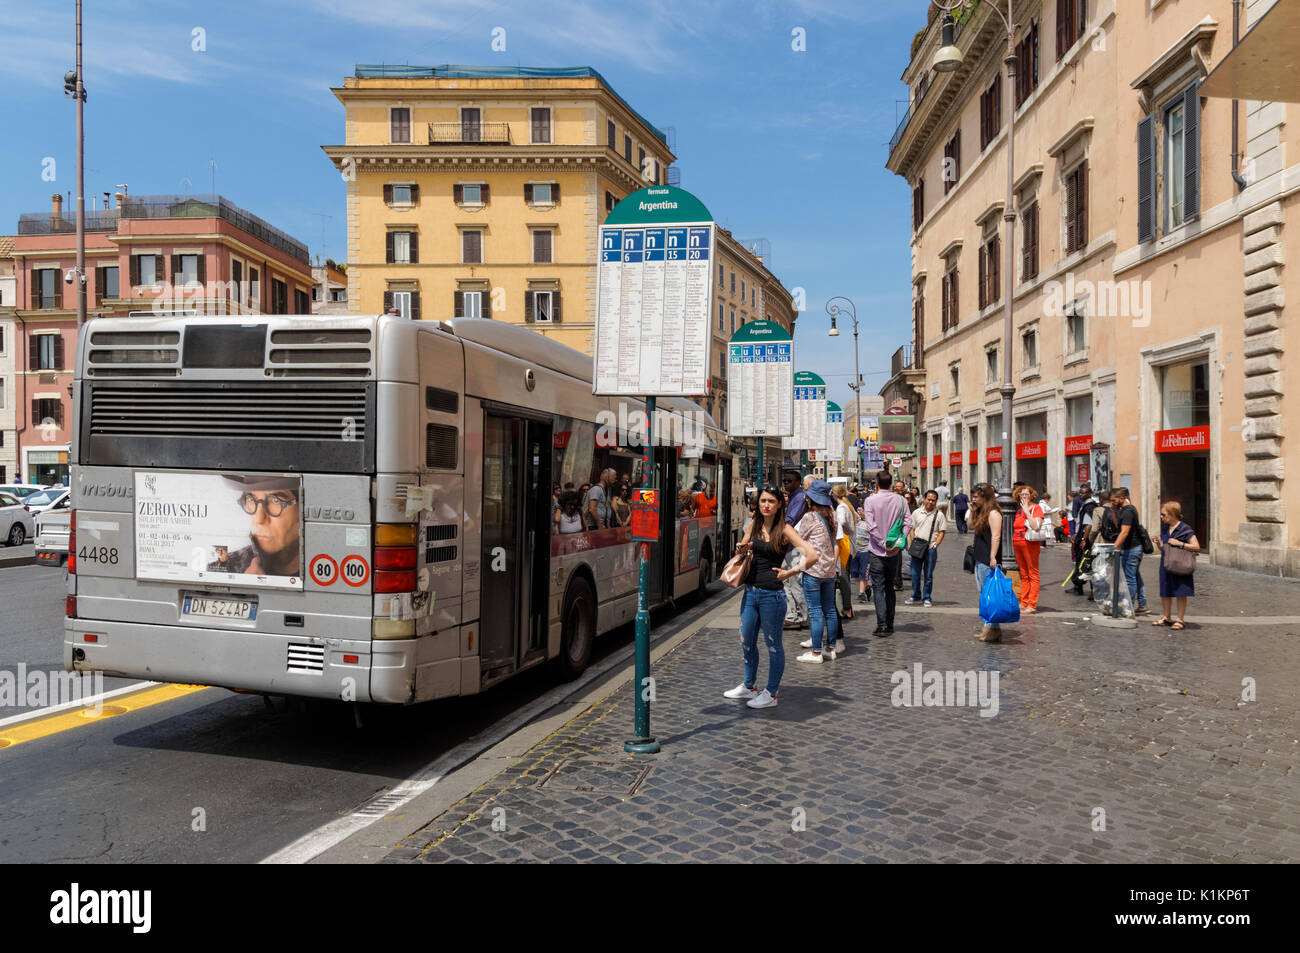 Bus stop on Corso Vittorio Emanuele II in Rome, Italy Stock Photo